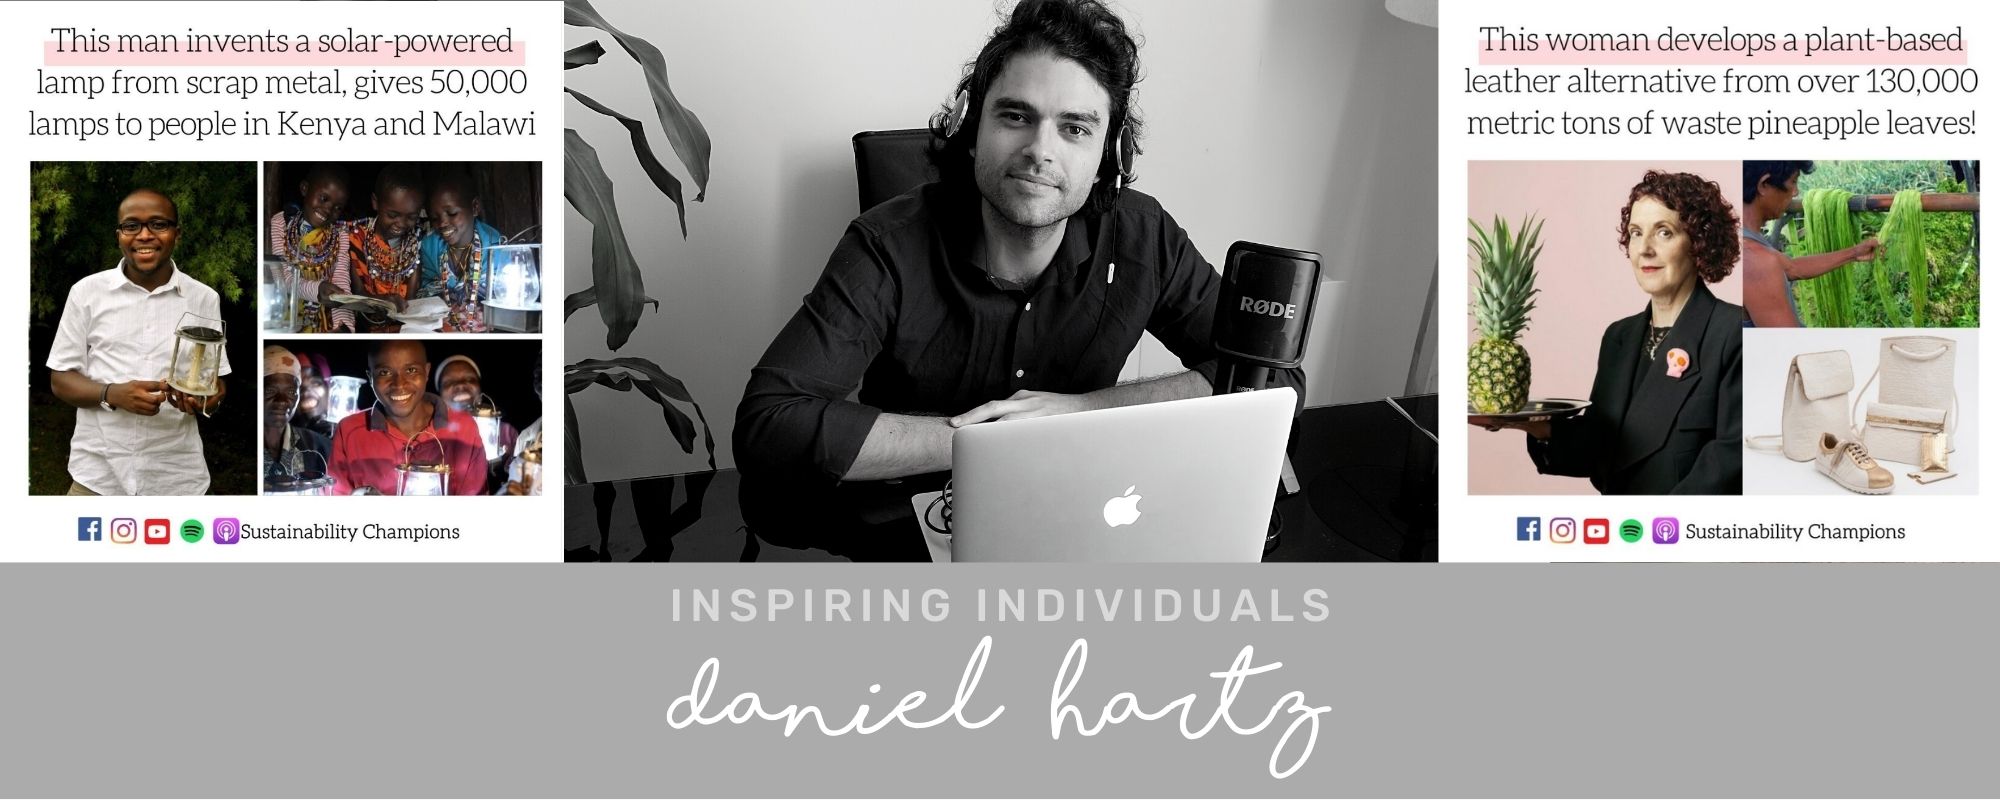 INSPIRING INDIVIDUAL: Daniel Hartz